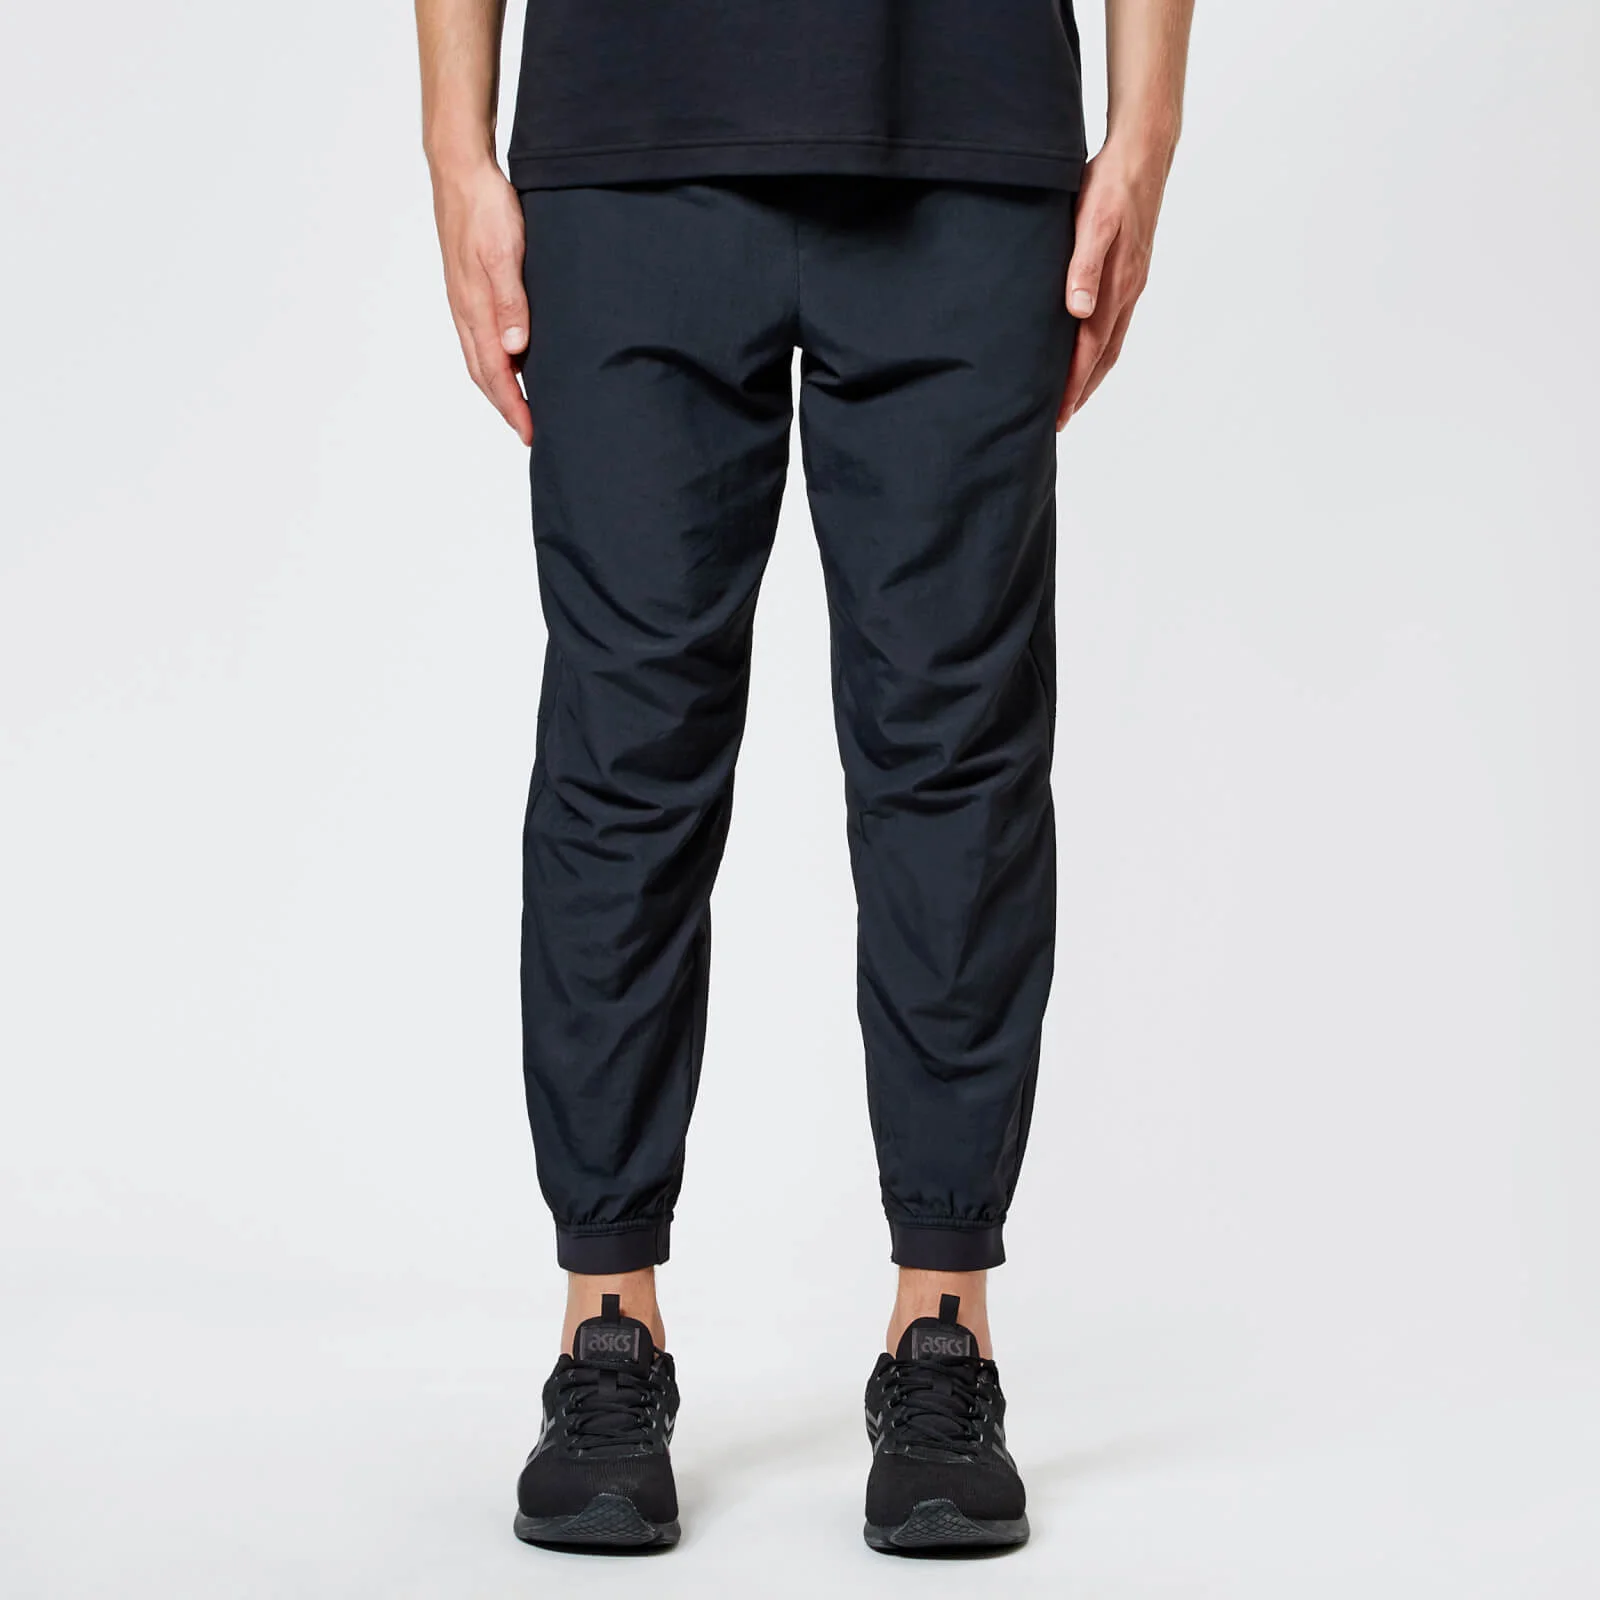 Calvin Klein Performance Men's Woven Pants - CK Black Image 1